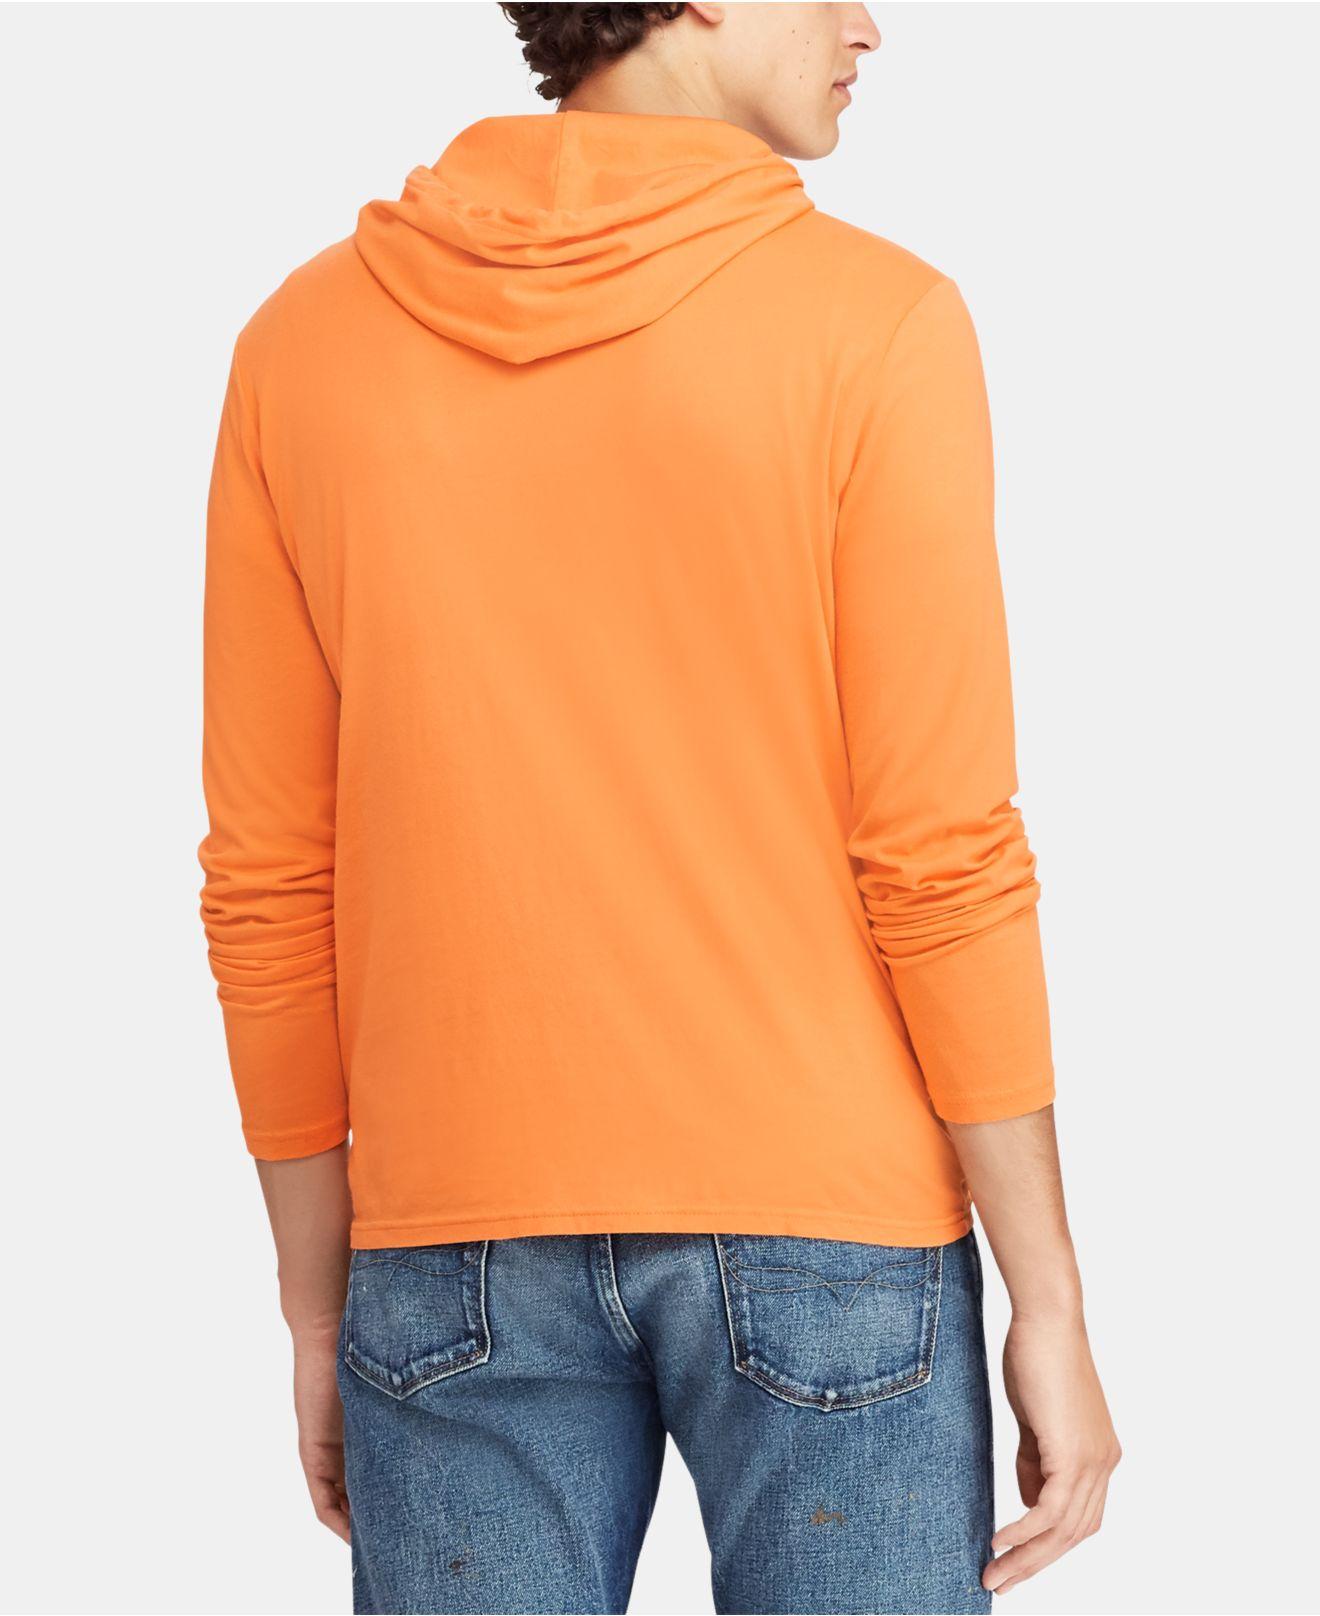 Polo Ralph Lauren Cotton Jersey T-shirt Hoodie in Orange for Men - Lyst